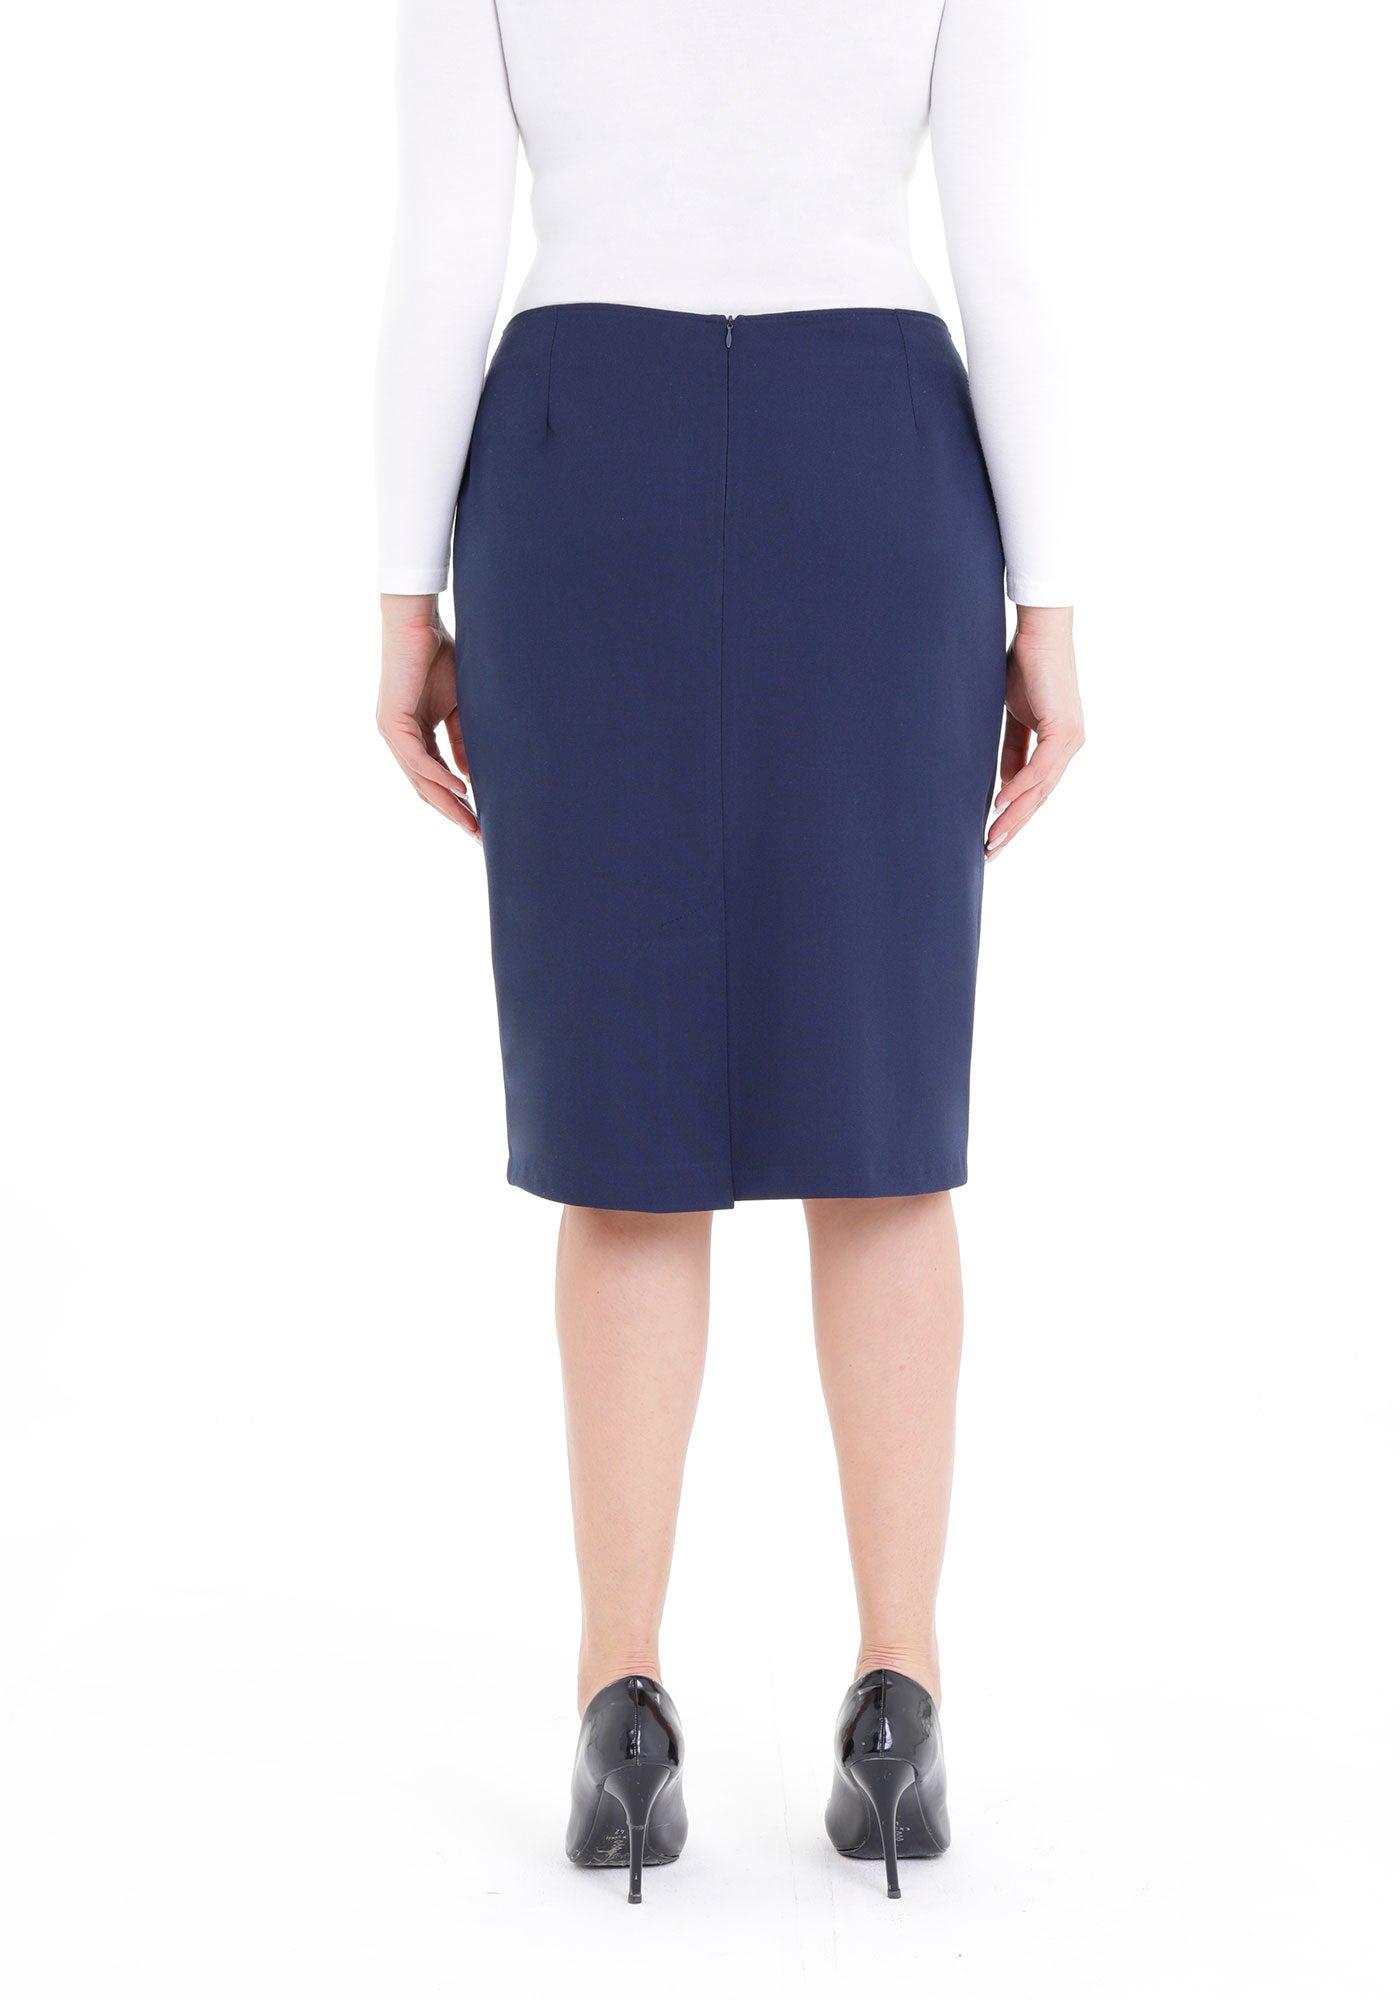 Women's Oversized Comfort Fit Knee-High Navy Midi Pencil Skirt G-Line